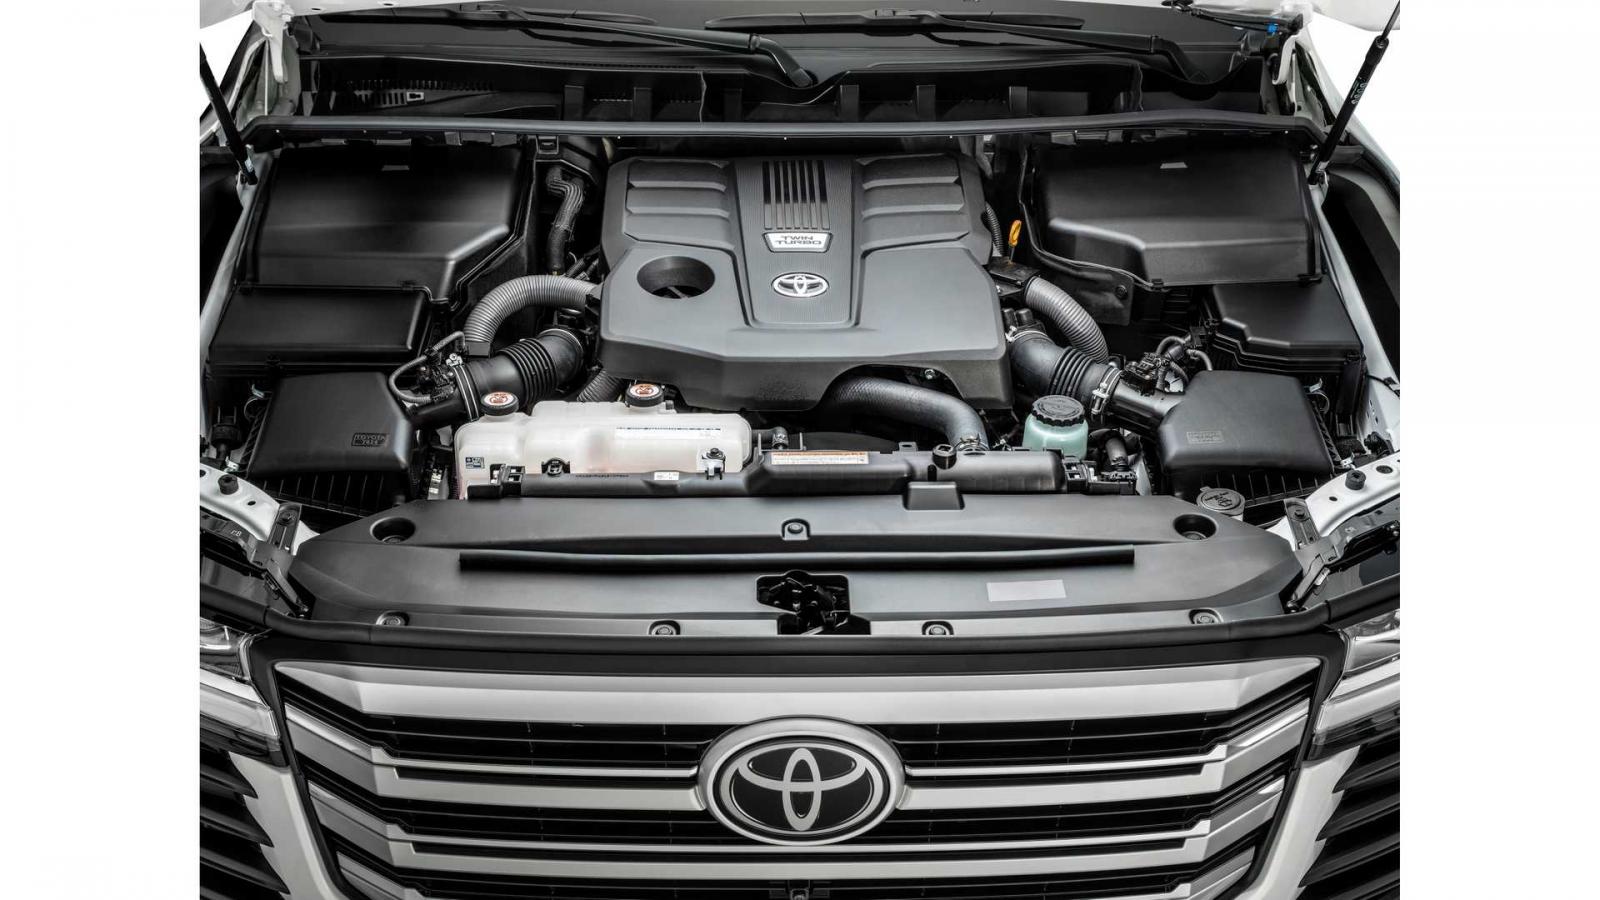 Toyota Land Cruiser engine